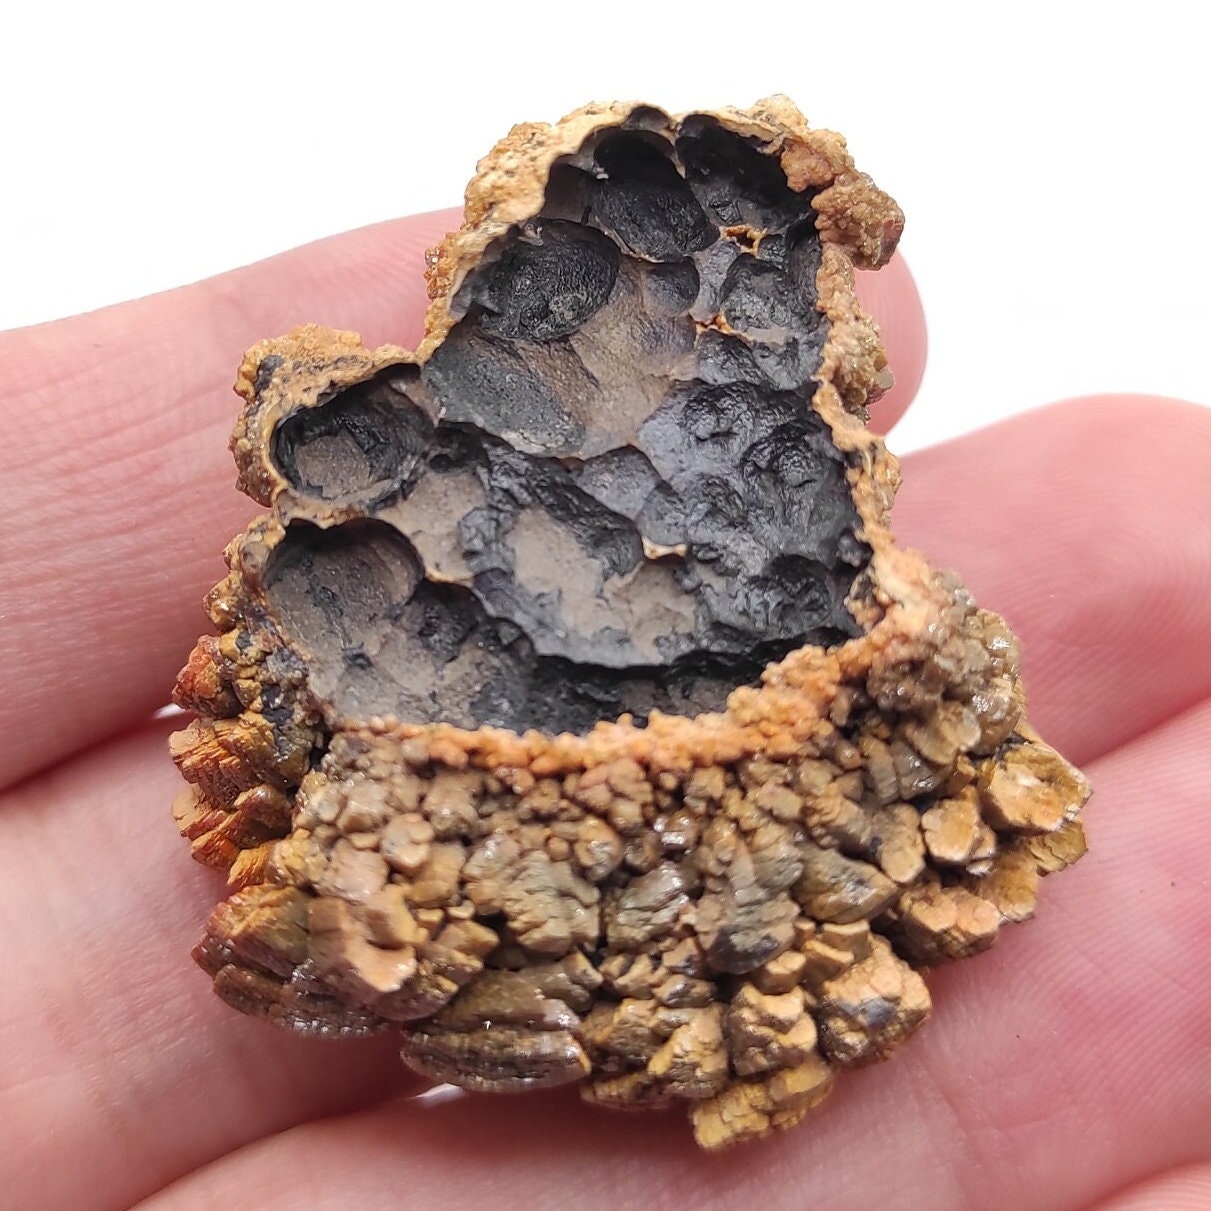 32g Vanadinite var. Endlichite - New Variety Find (April 2023) - Vanadinite Mineral Specimen from Mibladen, Morocco - Coud'a Workings